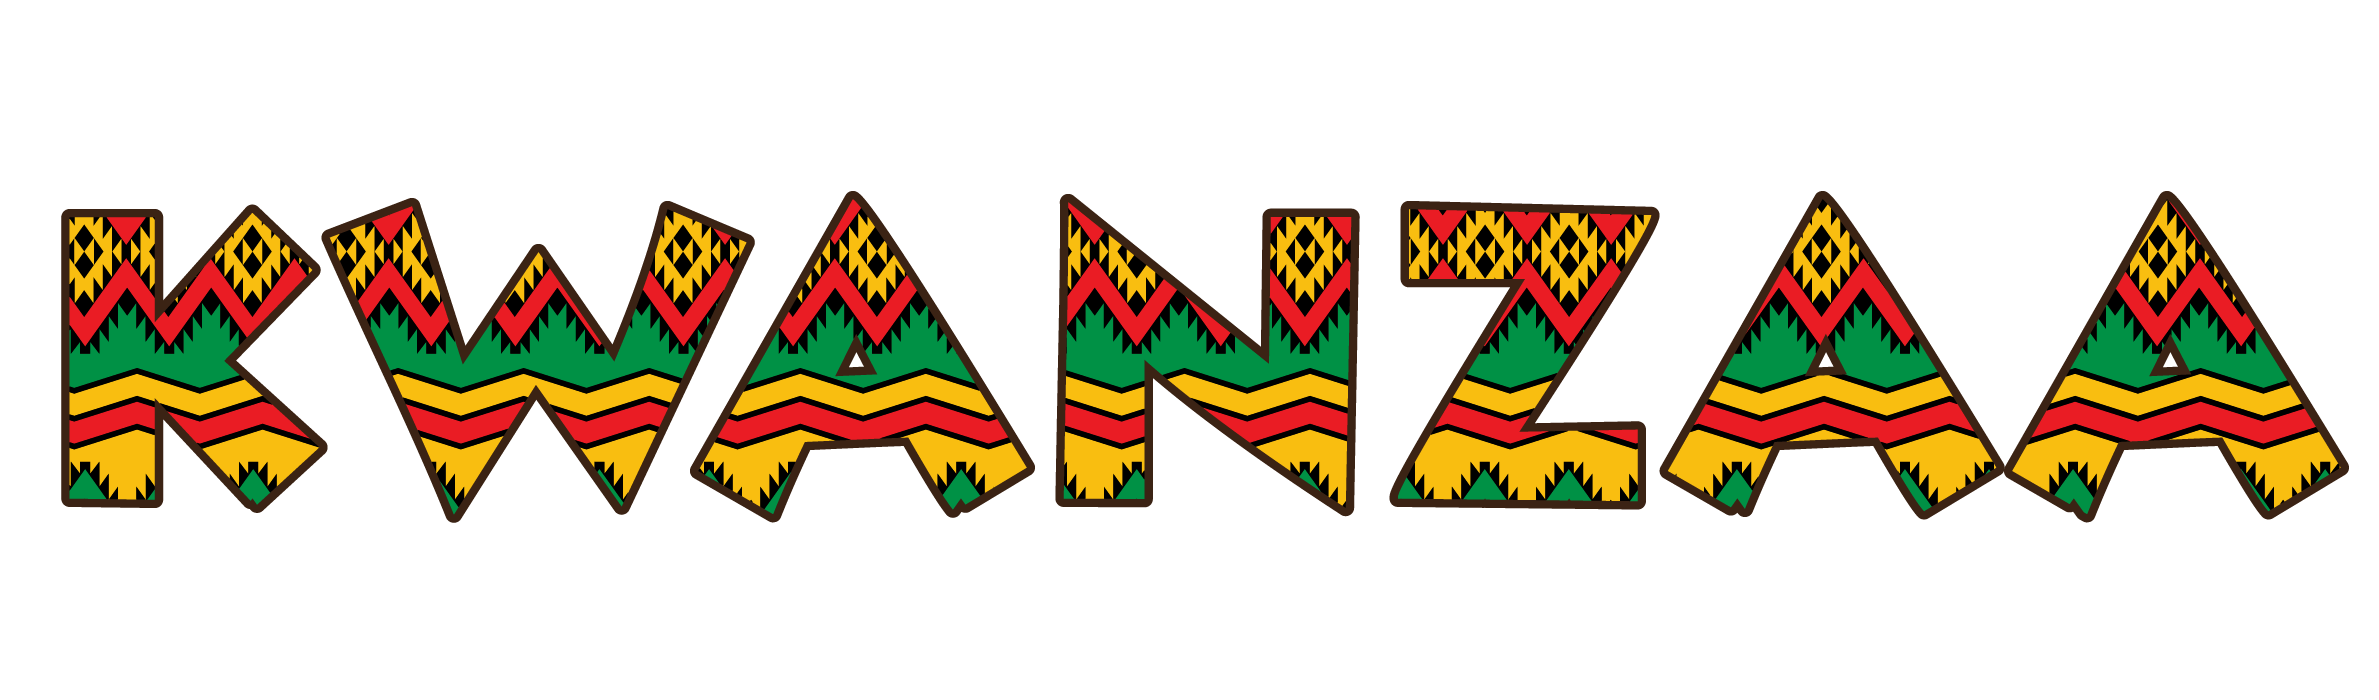 Kwanzaa title design - pattern filled